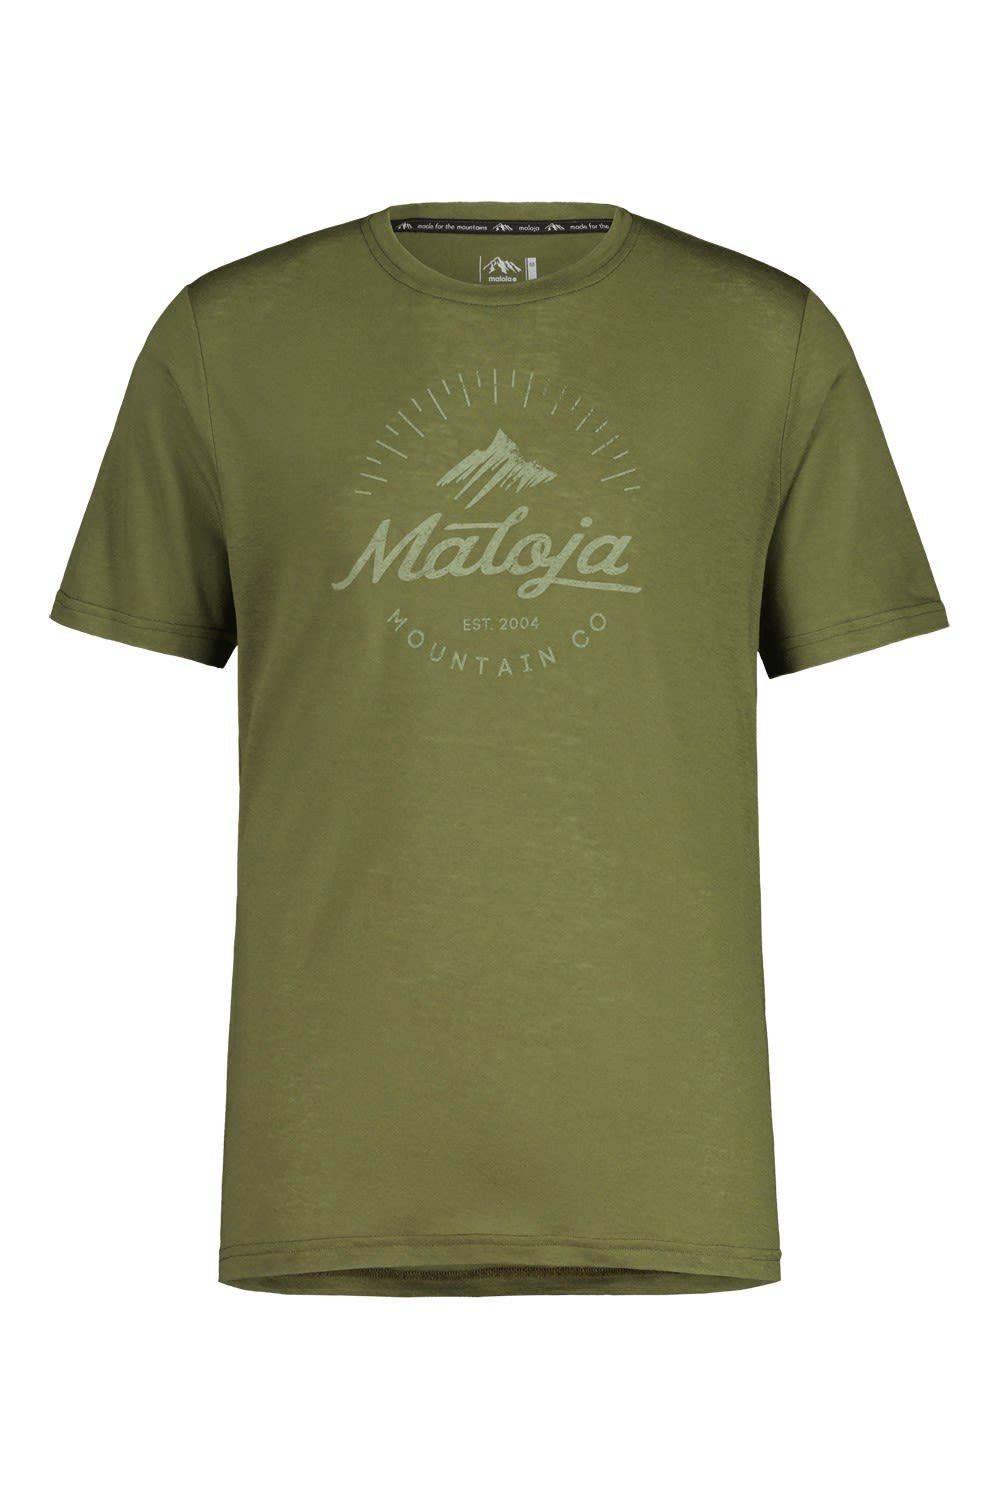 Maloja T-Shirt Maloja M Brown T-shirt Roccam. Herren Kurzarm-Shirt